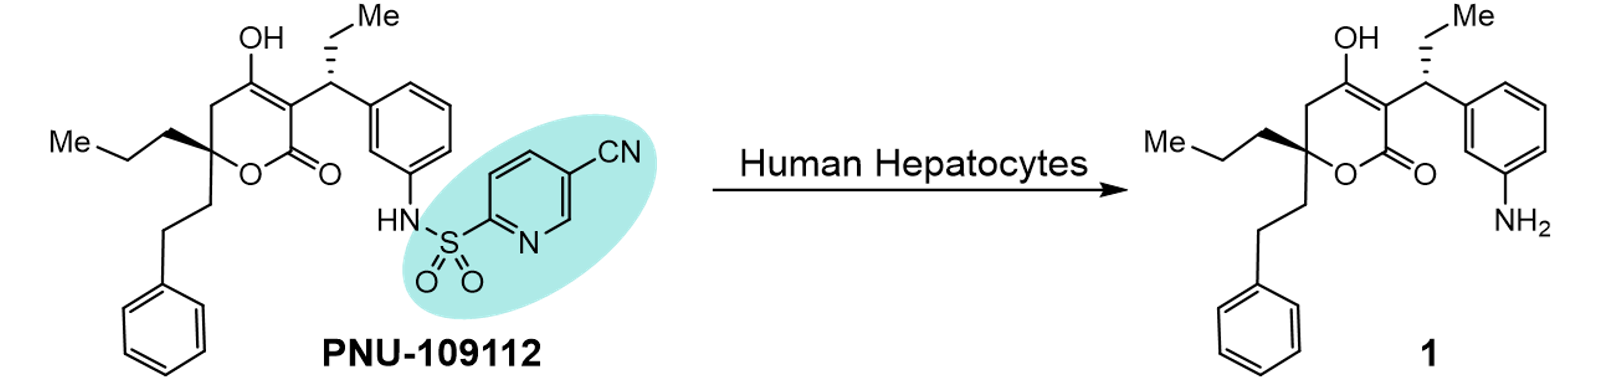 Human hepatocytes reaction.